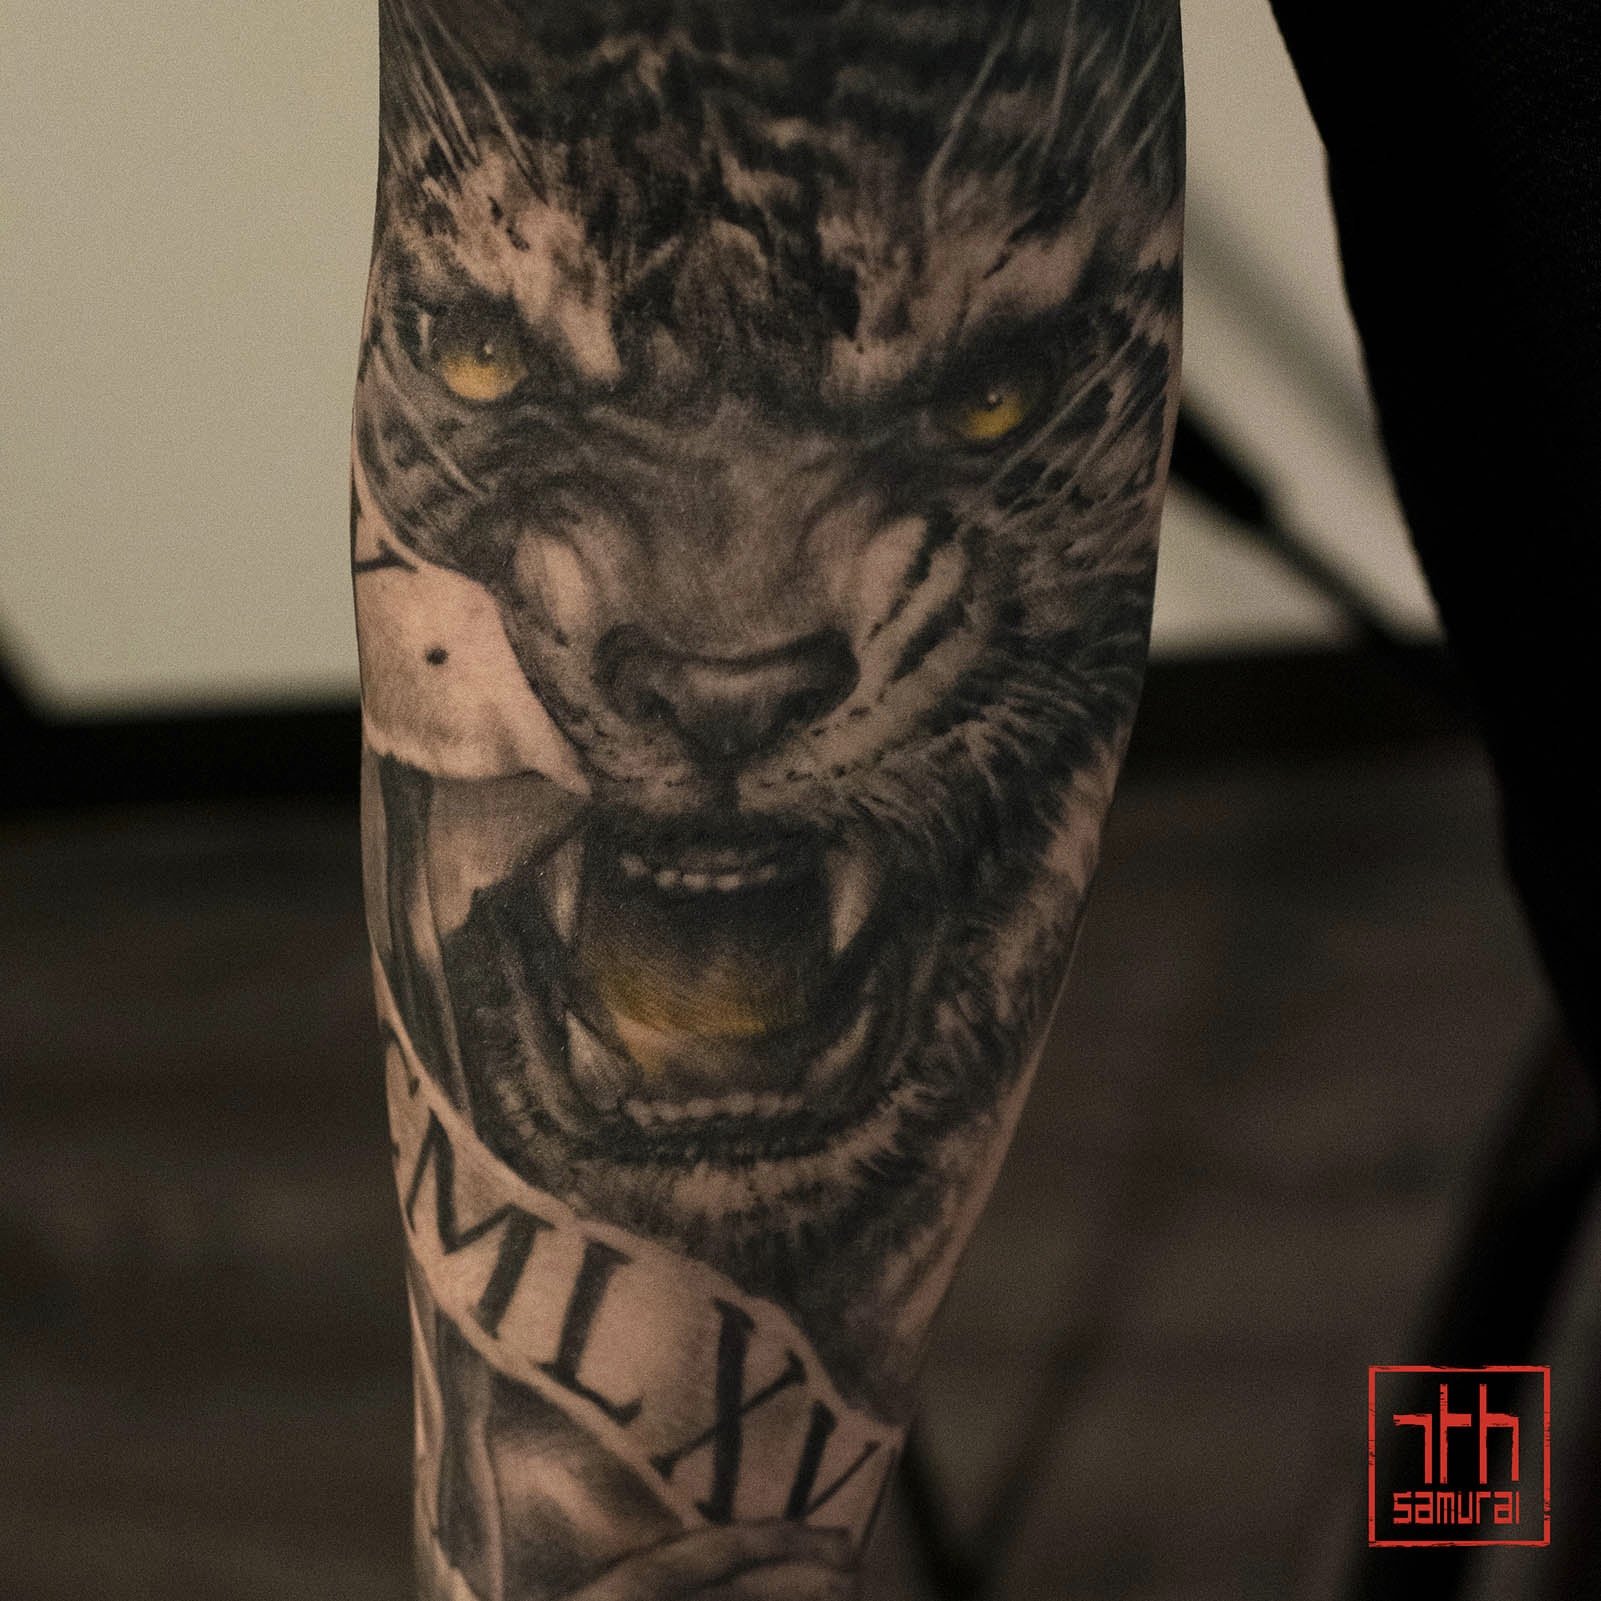 tiger roman numeral banner  Men's realism tattoo with yellow highlights  asian Tattoo artist: Kai at 7th Samurai. YEG Edmonton, Alberta, Canada) best 2020 